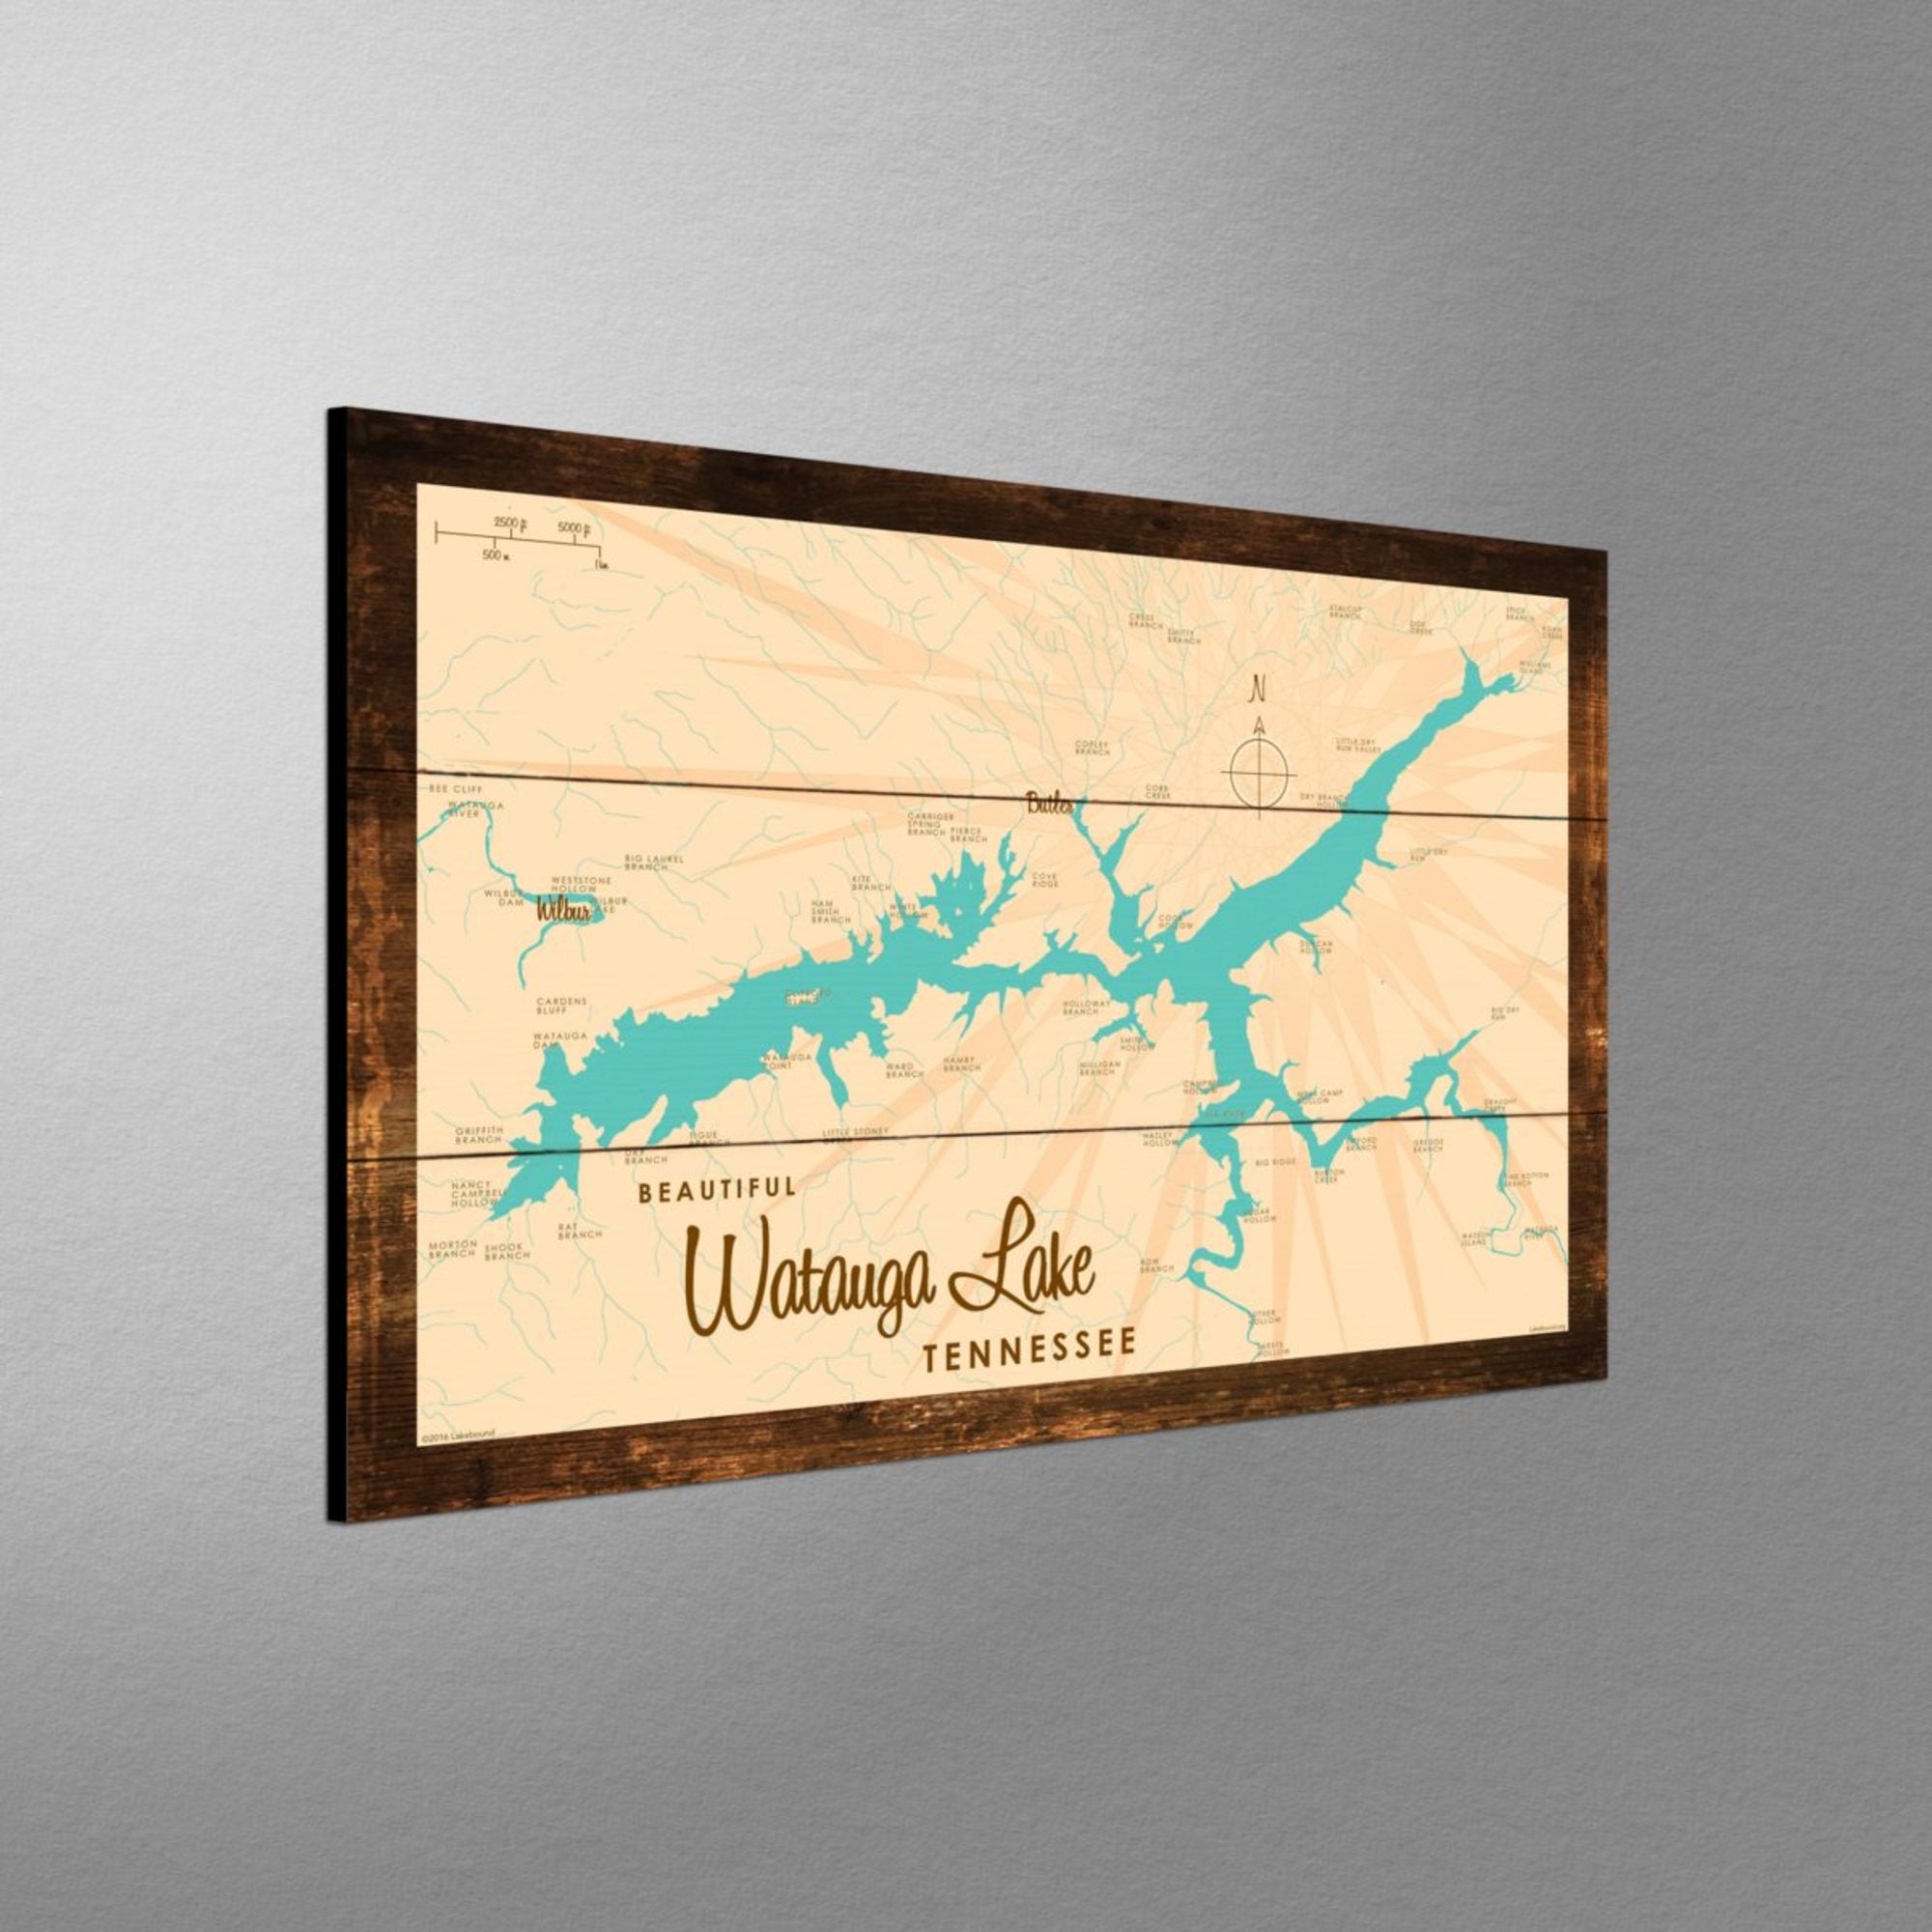 Watauga Lake Tennessee, Rustic Wood Sign Map Art